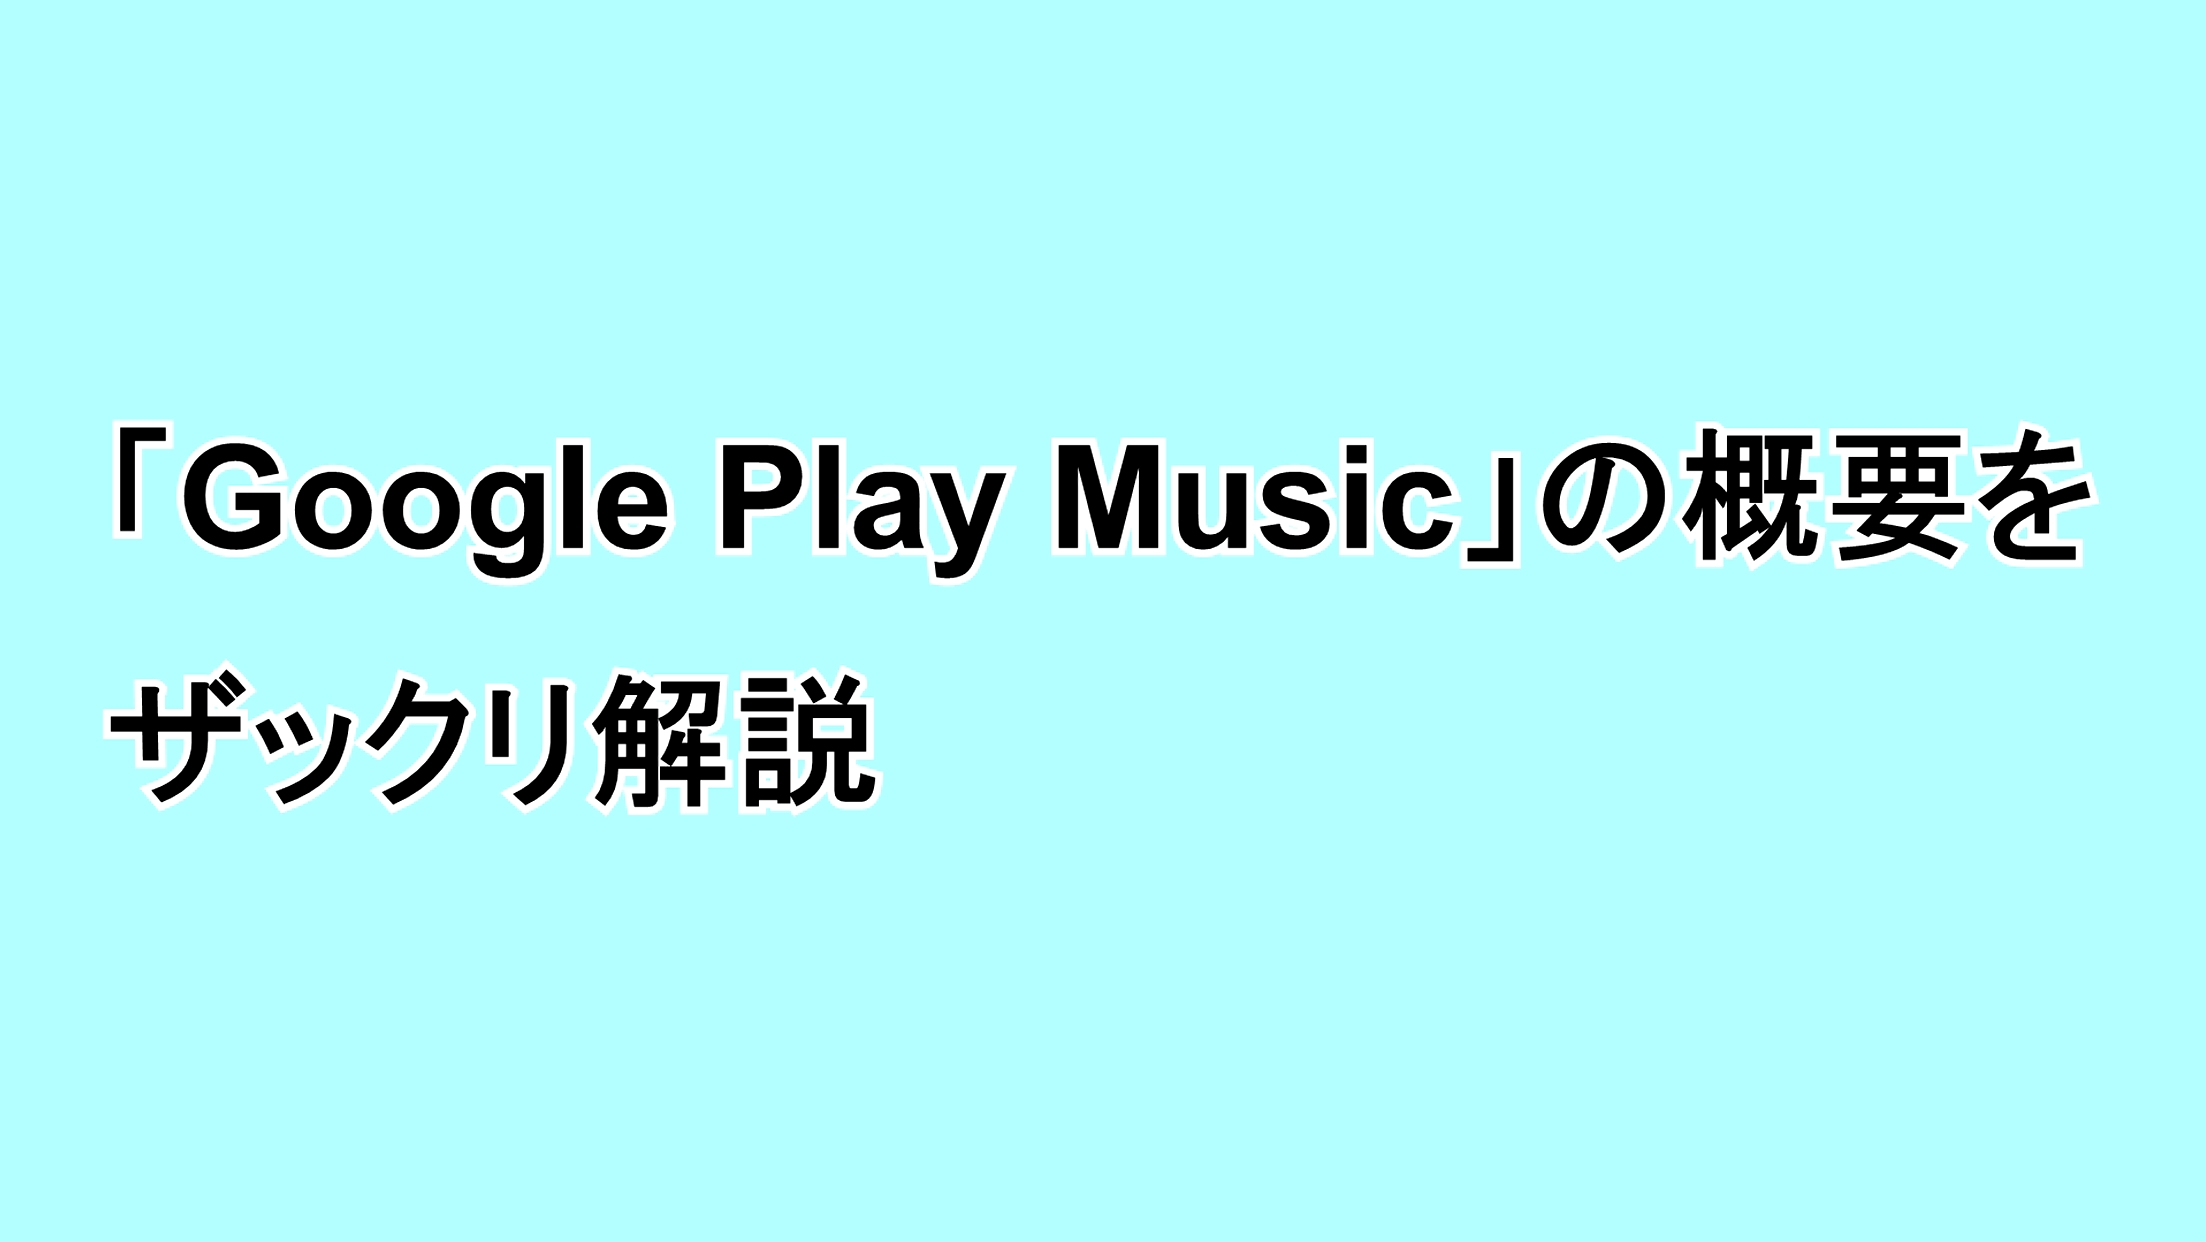 「Google Play Music」の概要をザックリ解説